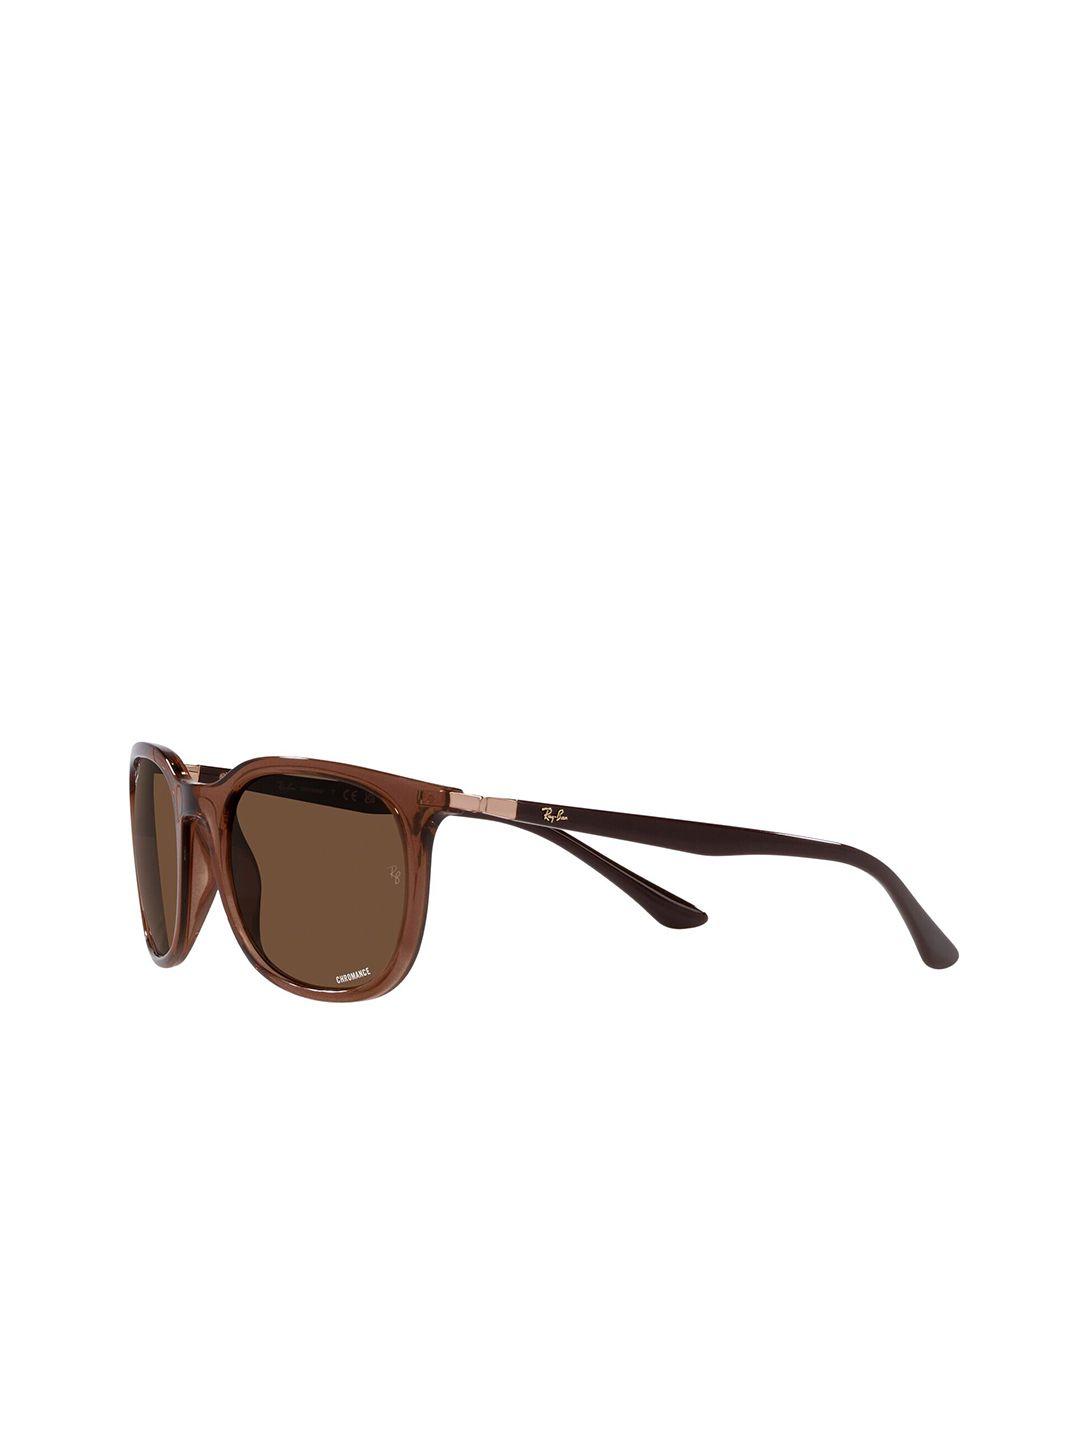 ray-ban unisex square sunglasses with polarised lens 8056597720748